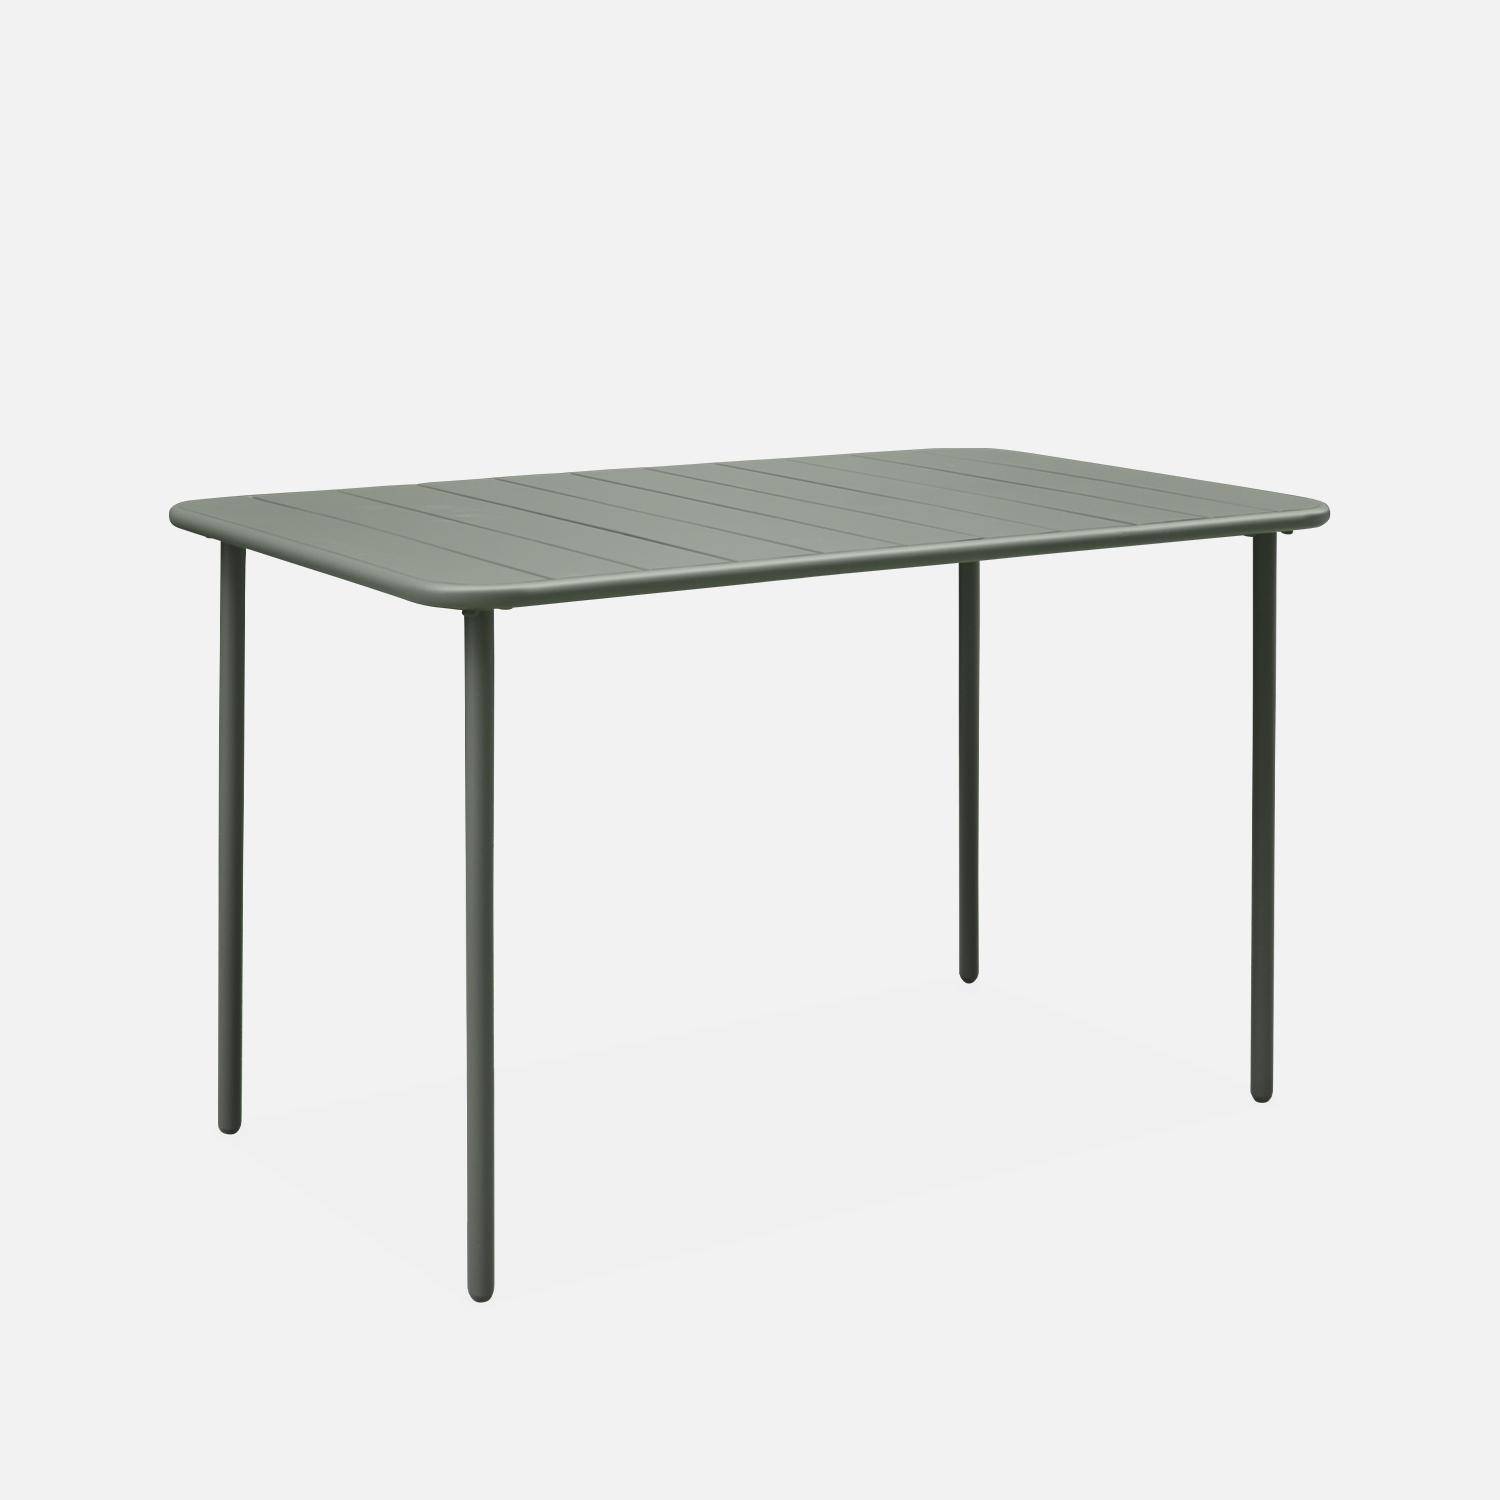 4-seater rectangular steel garden table, 120cm, Khaki Green Photo5